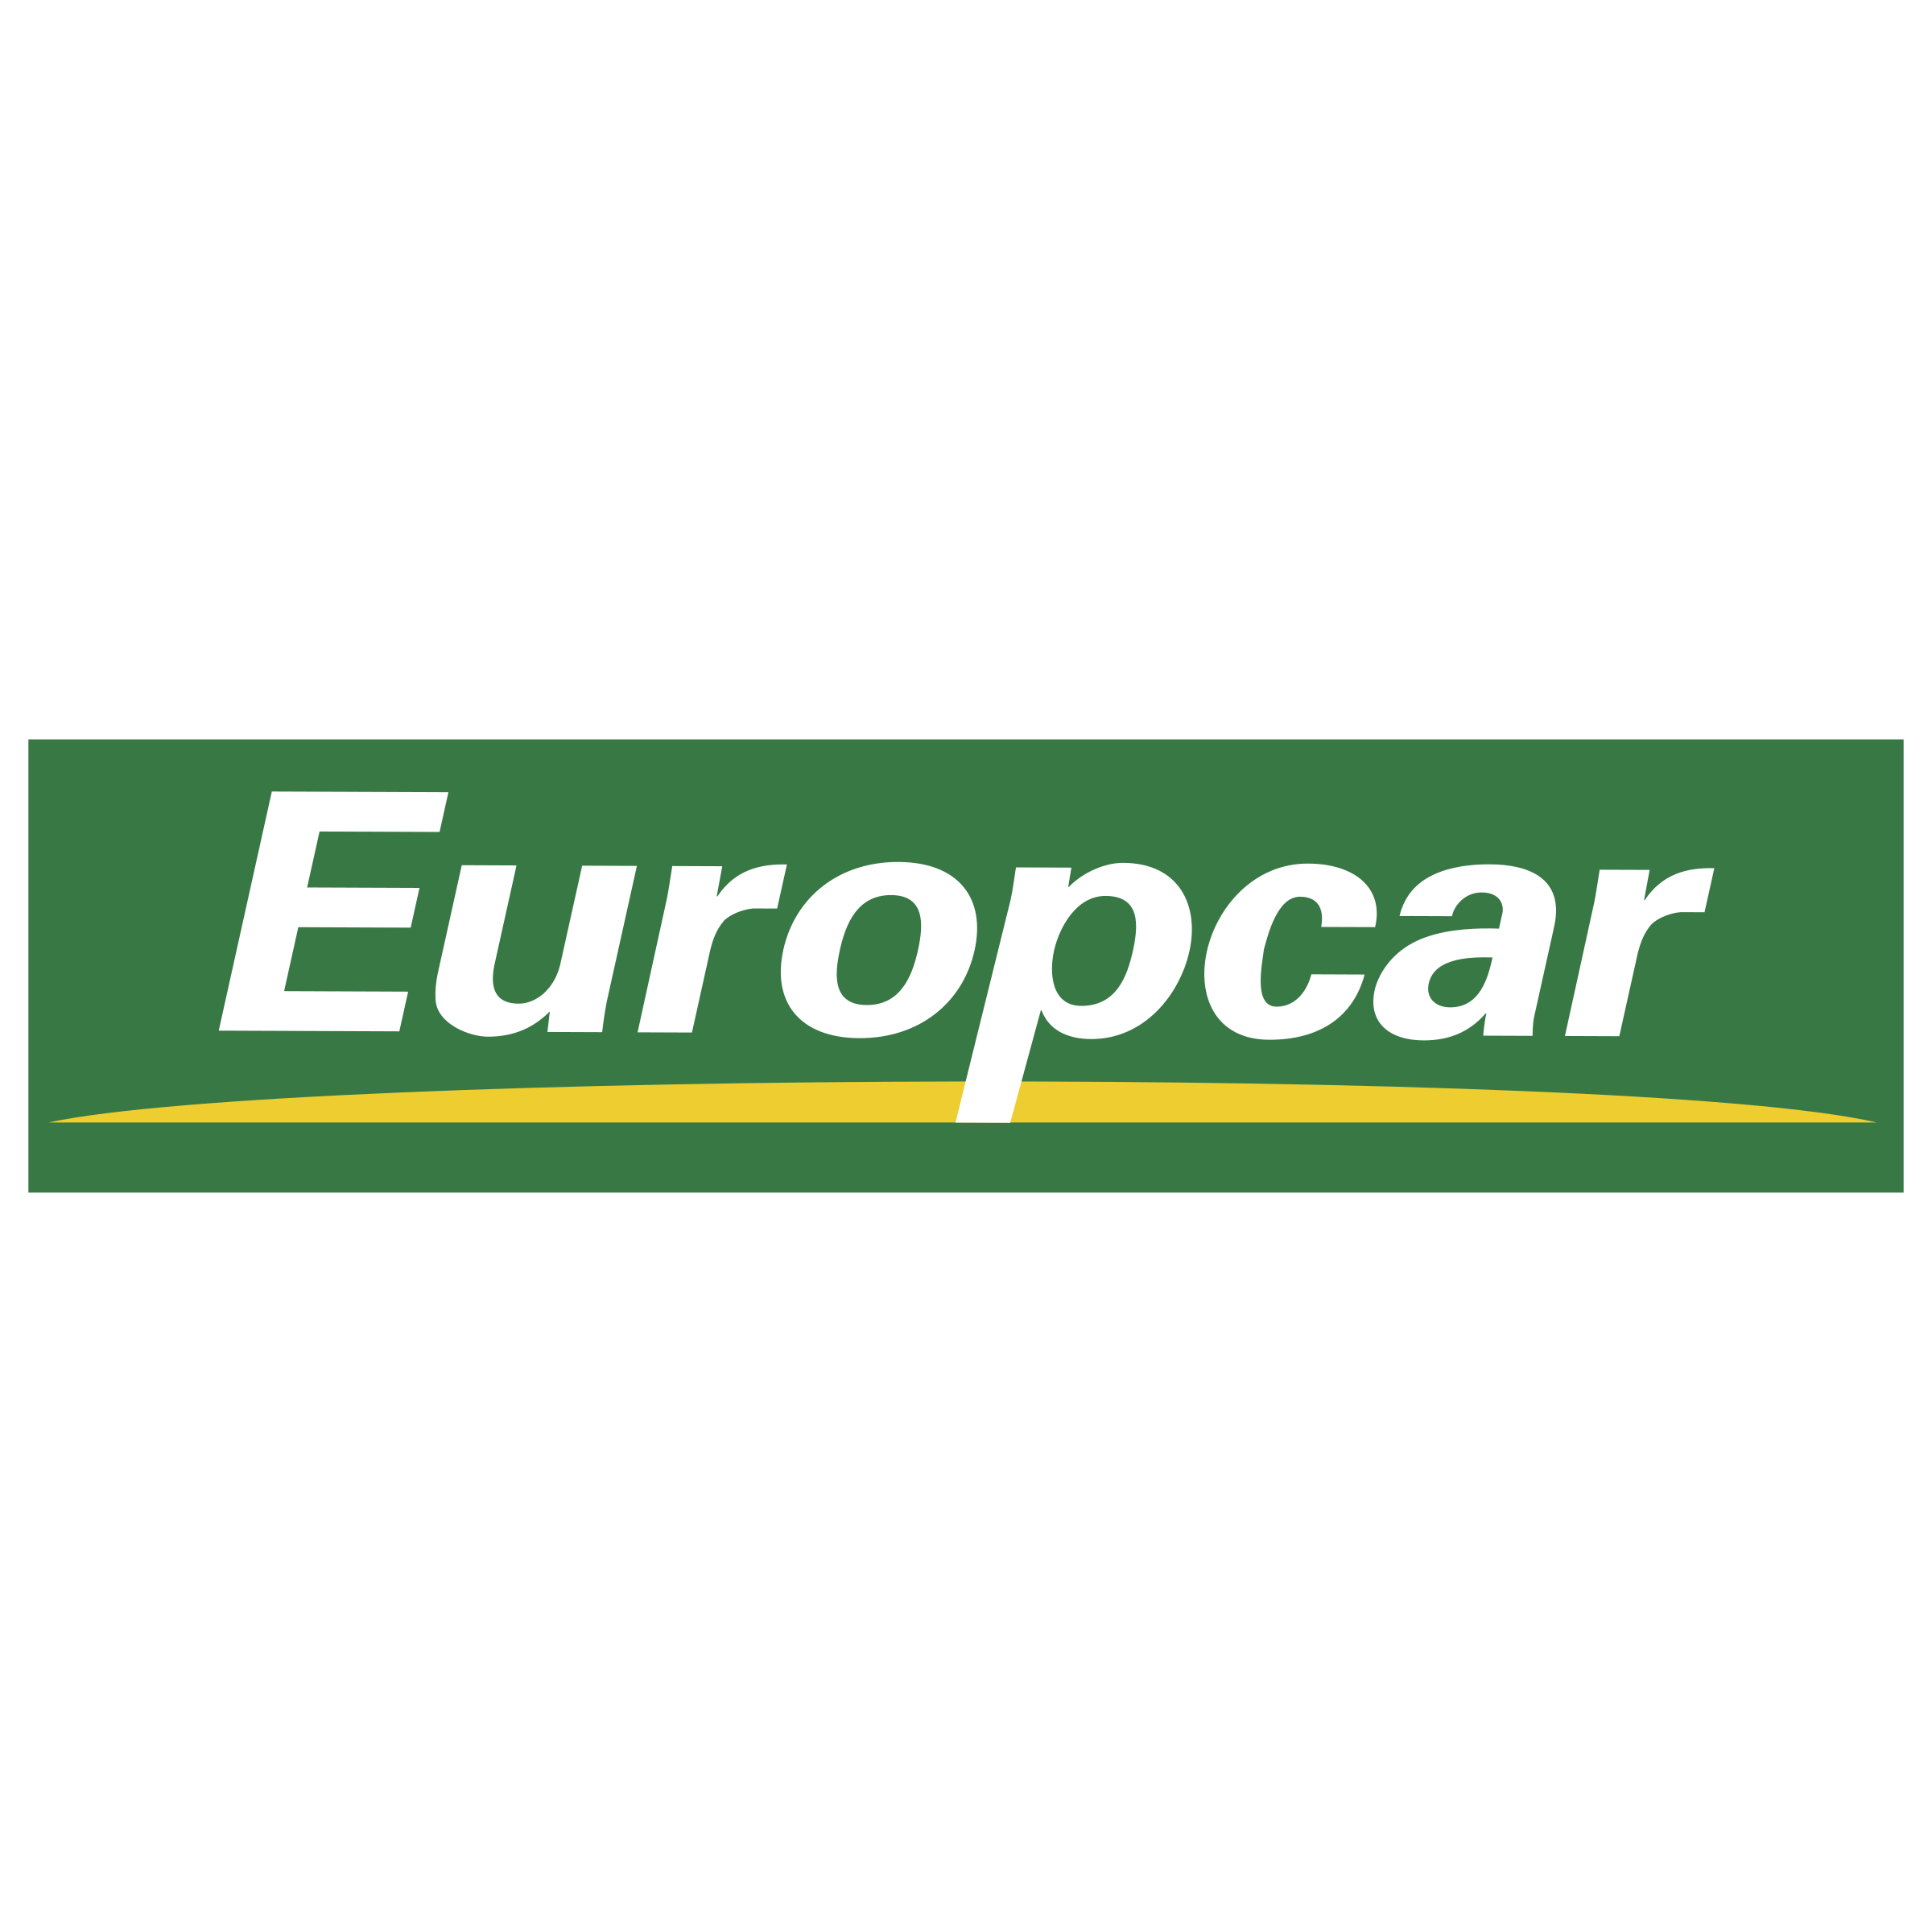 Europcar Logo PNG Transparent & SVG Vector.